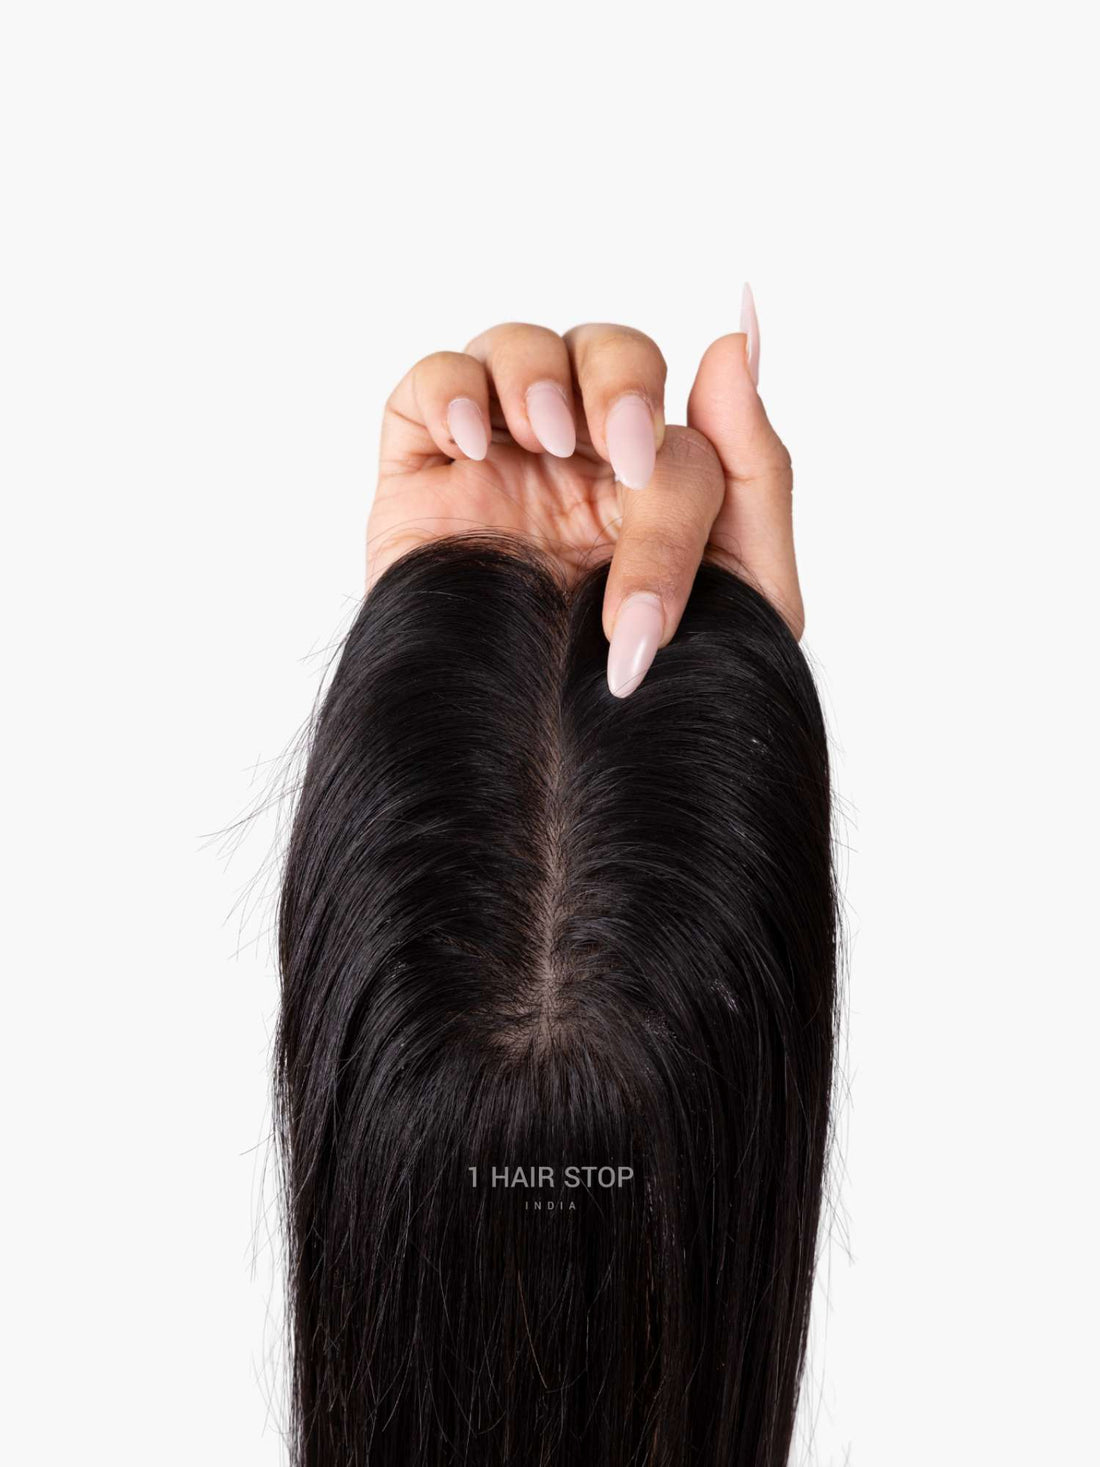 silk-hair-topper-size-2x5